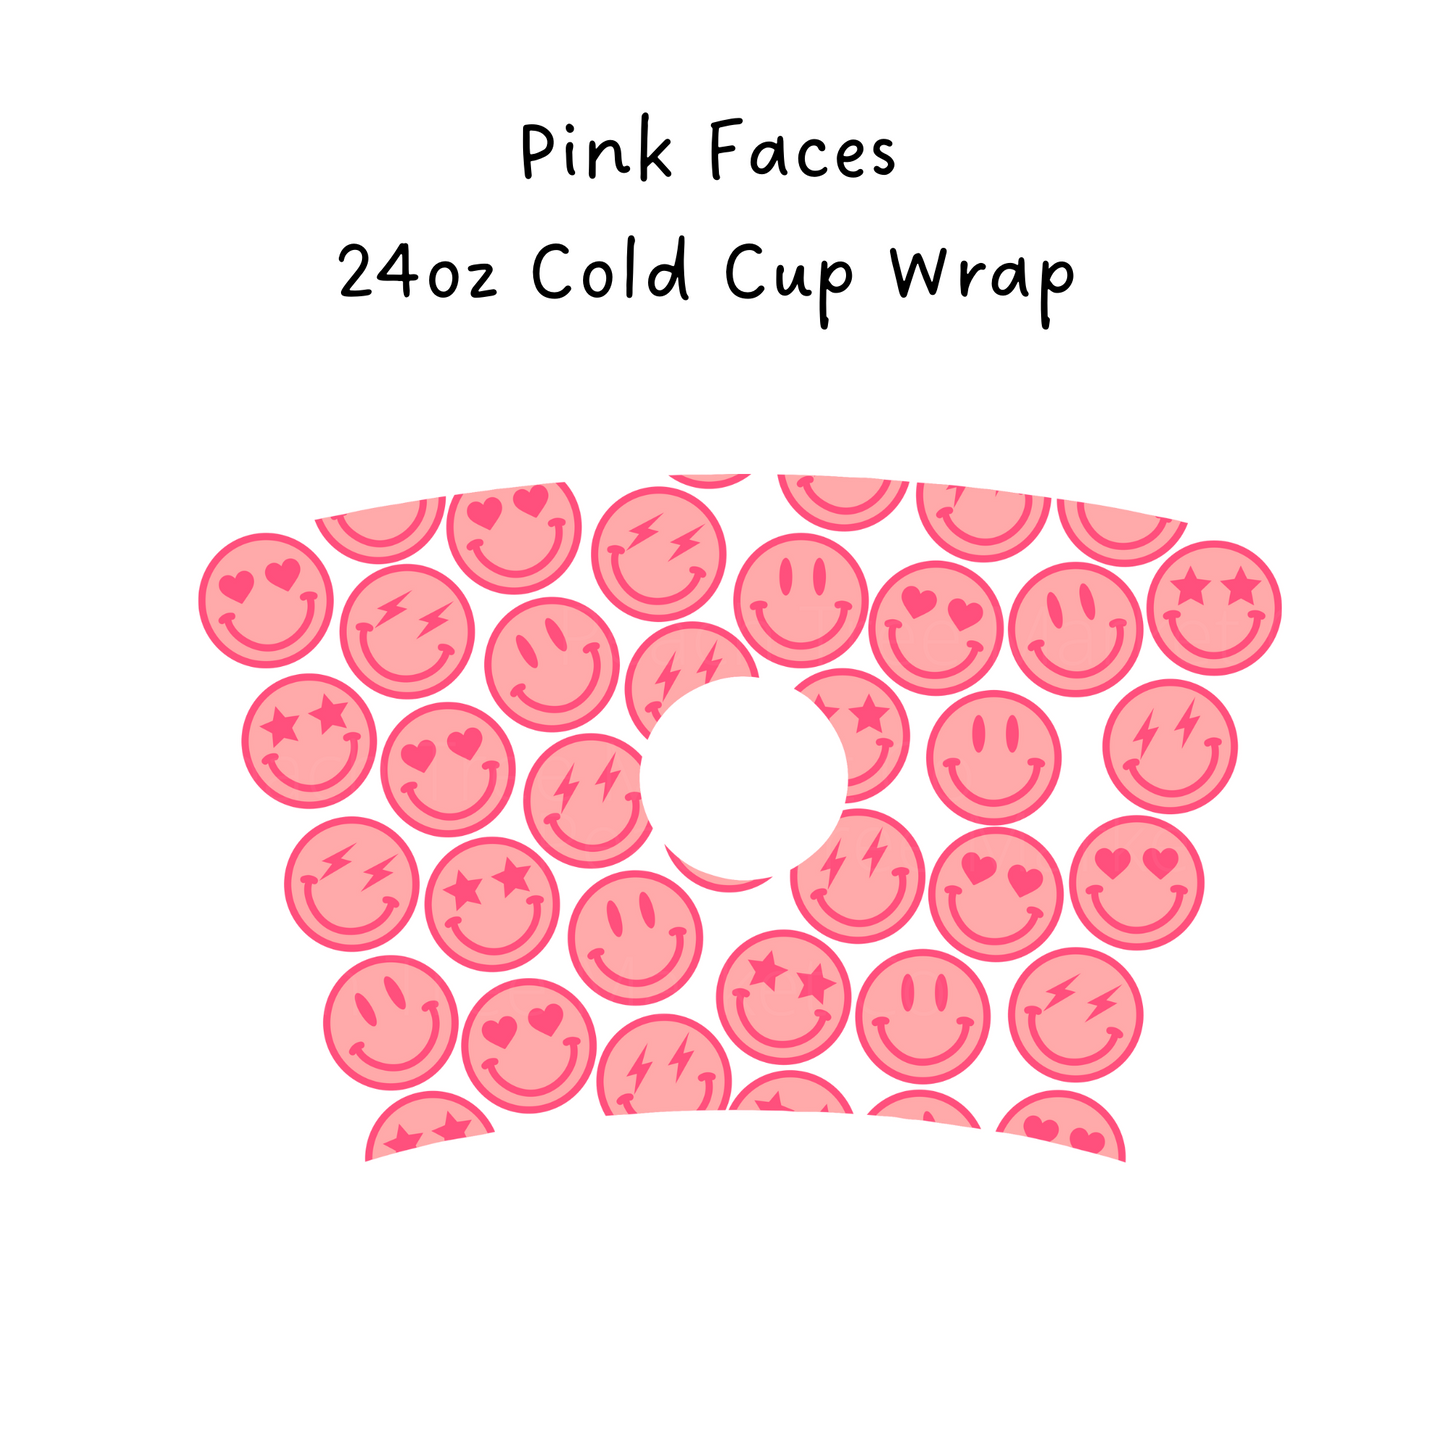 Pink Faces 24oz Cold Cup Wrap